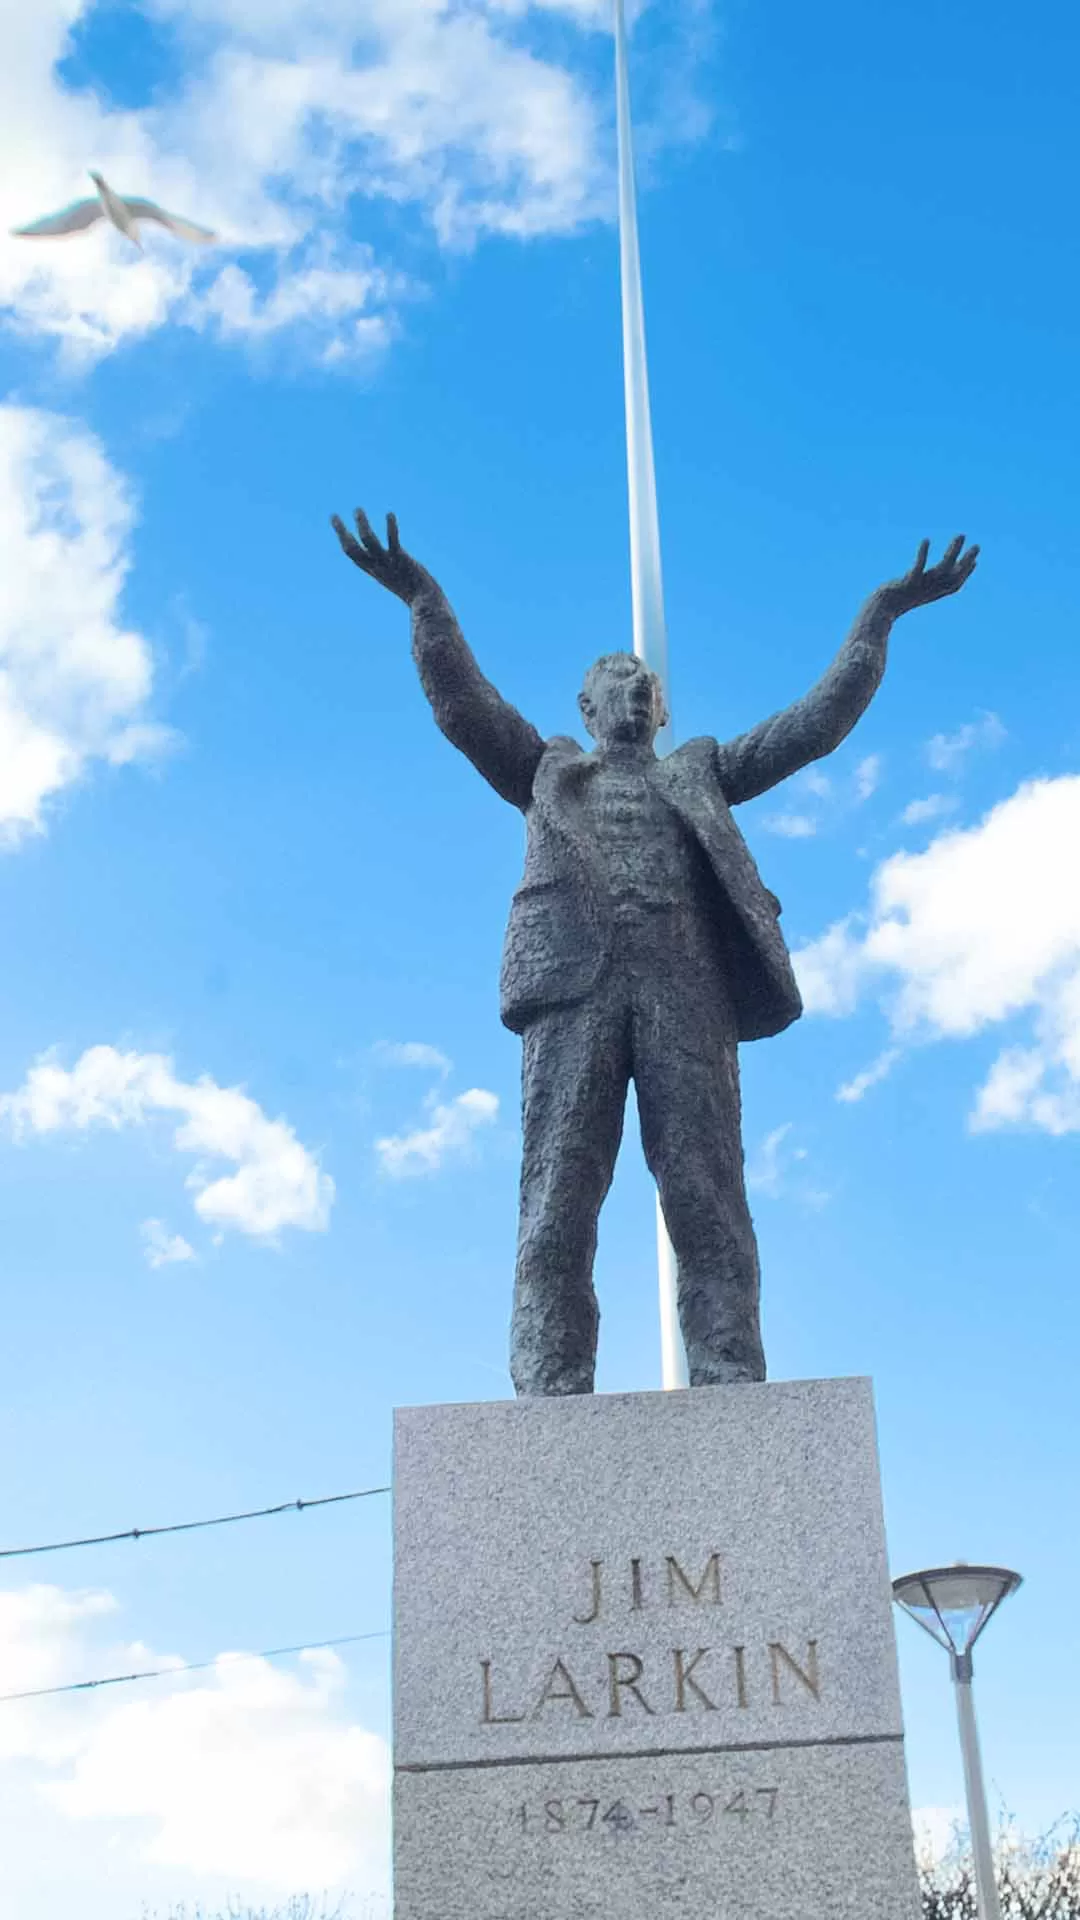 Jim Larkin Statue O'Connell Street Dublin Ireland